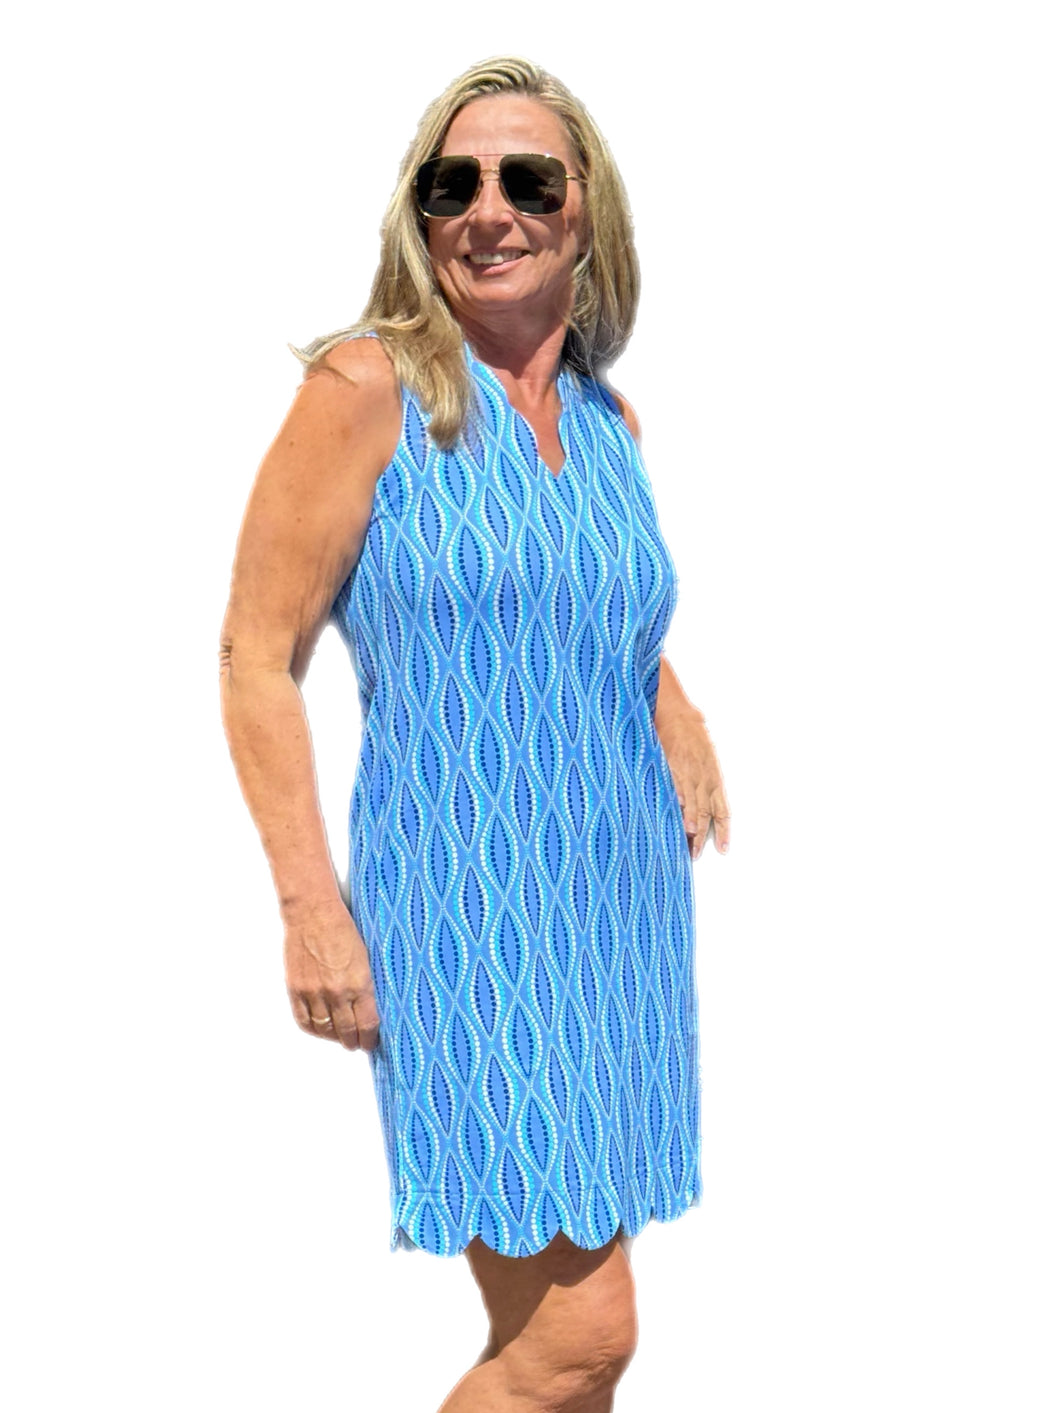 Scalloped-Neck and -Hem Sleeveless Dress with UPF50+ Blue Waves